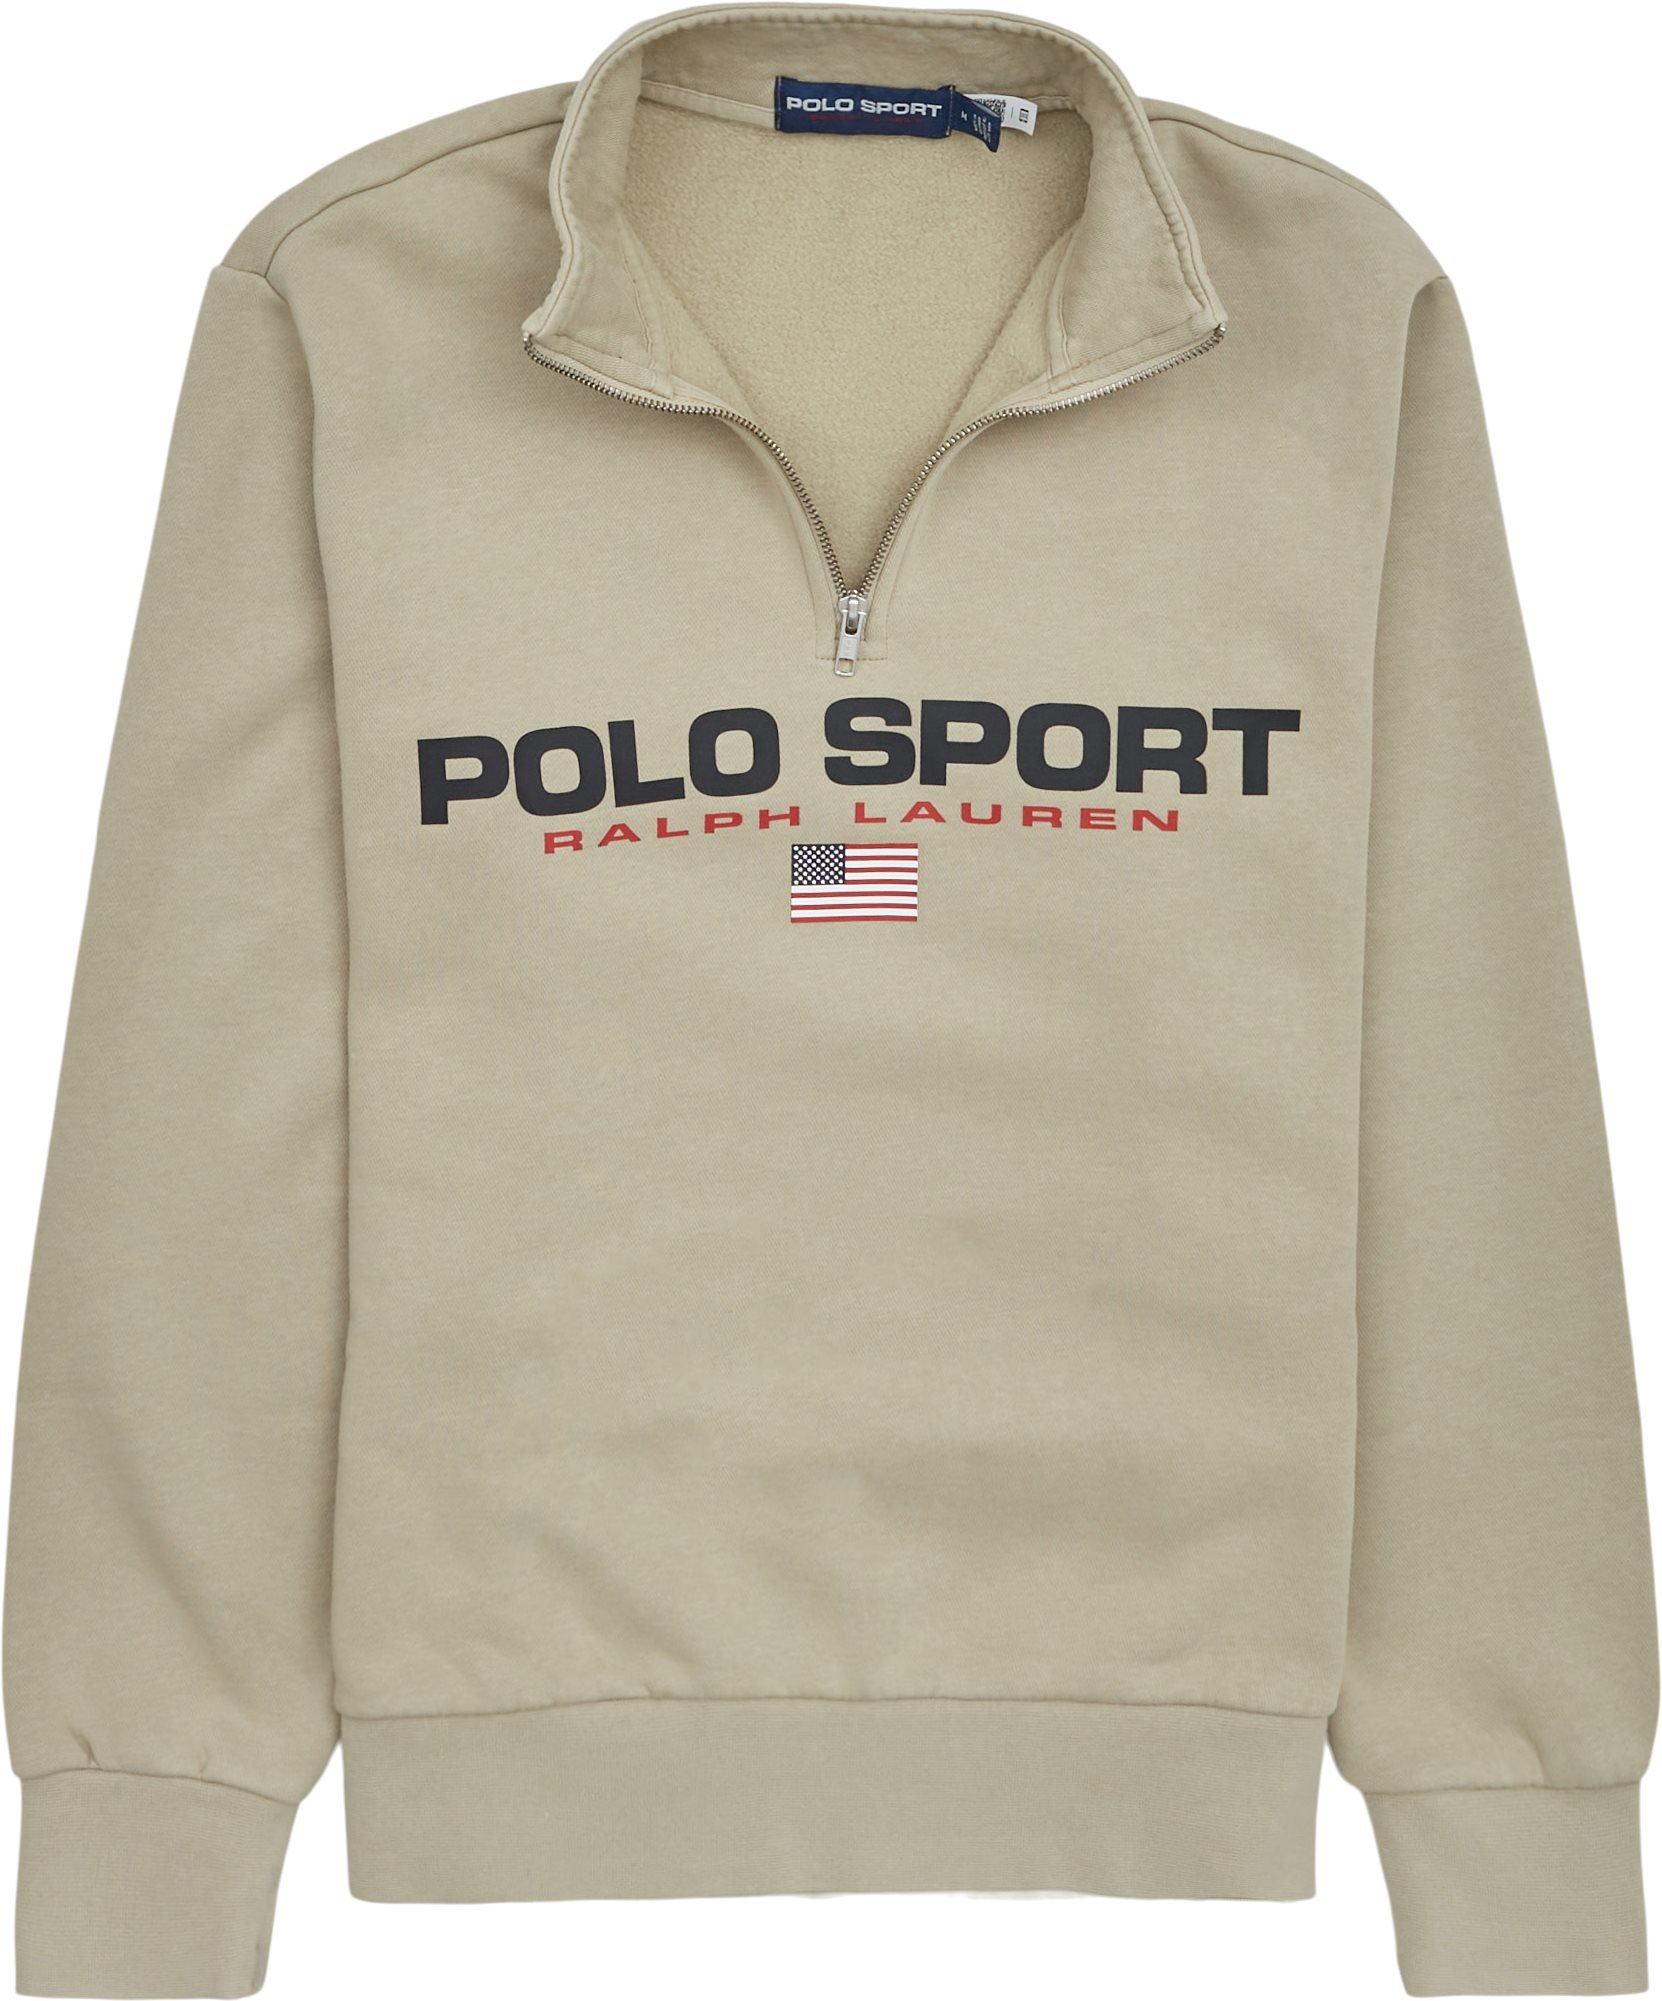 Polo Ralph Lauren Sweatshirts 710880522 Sand